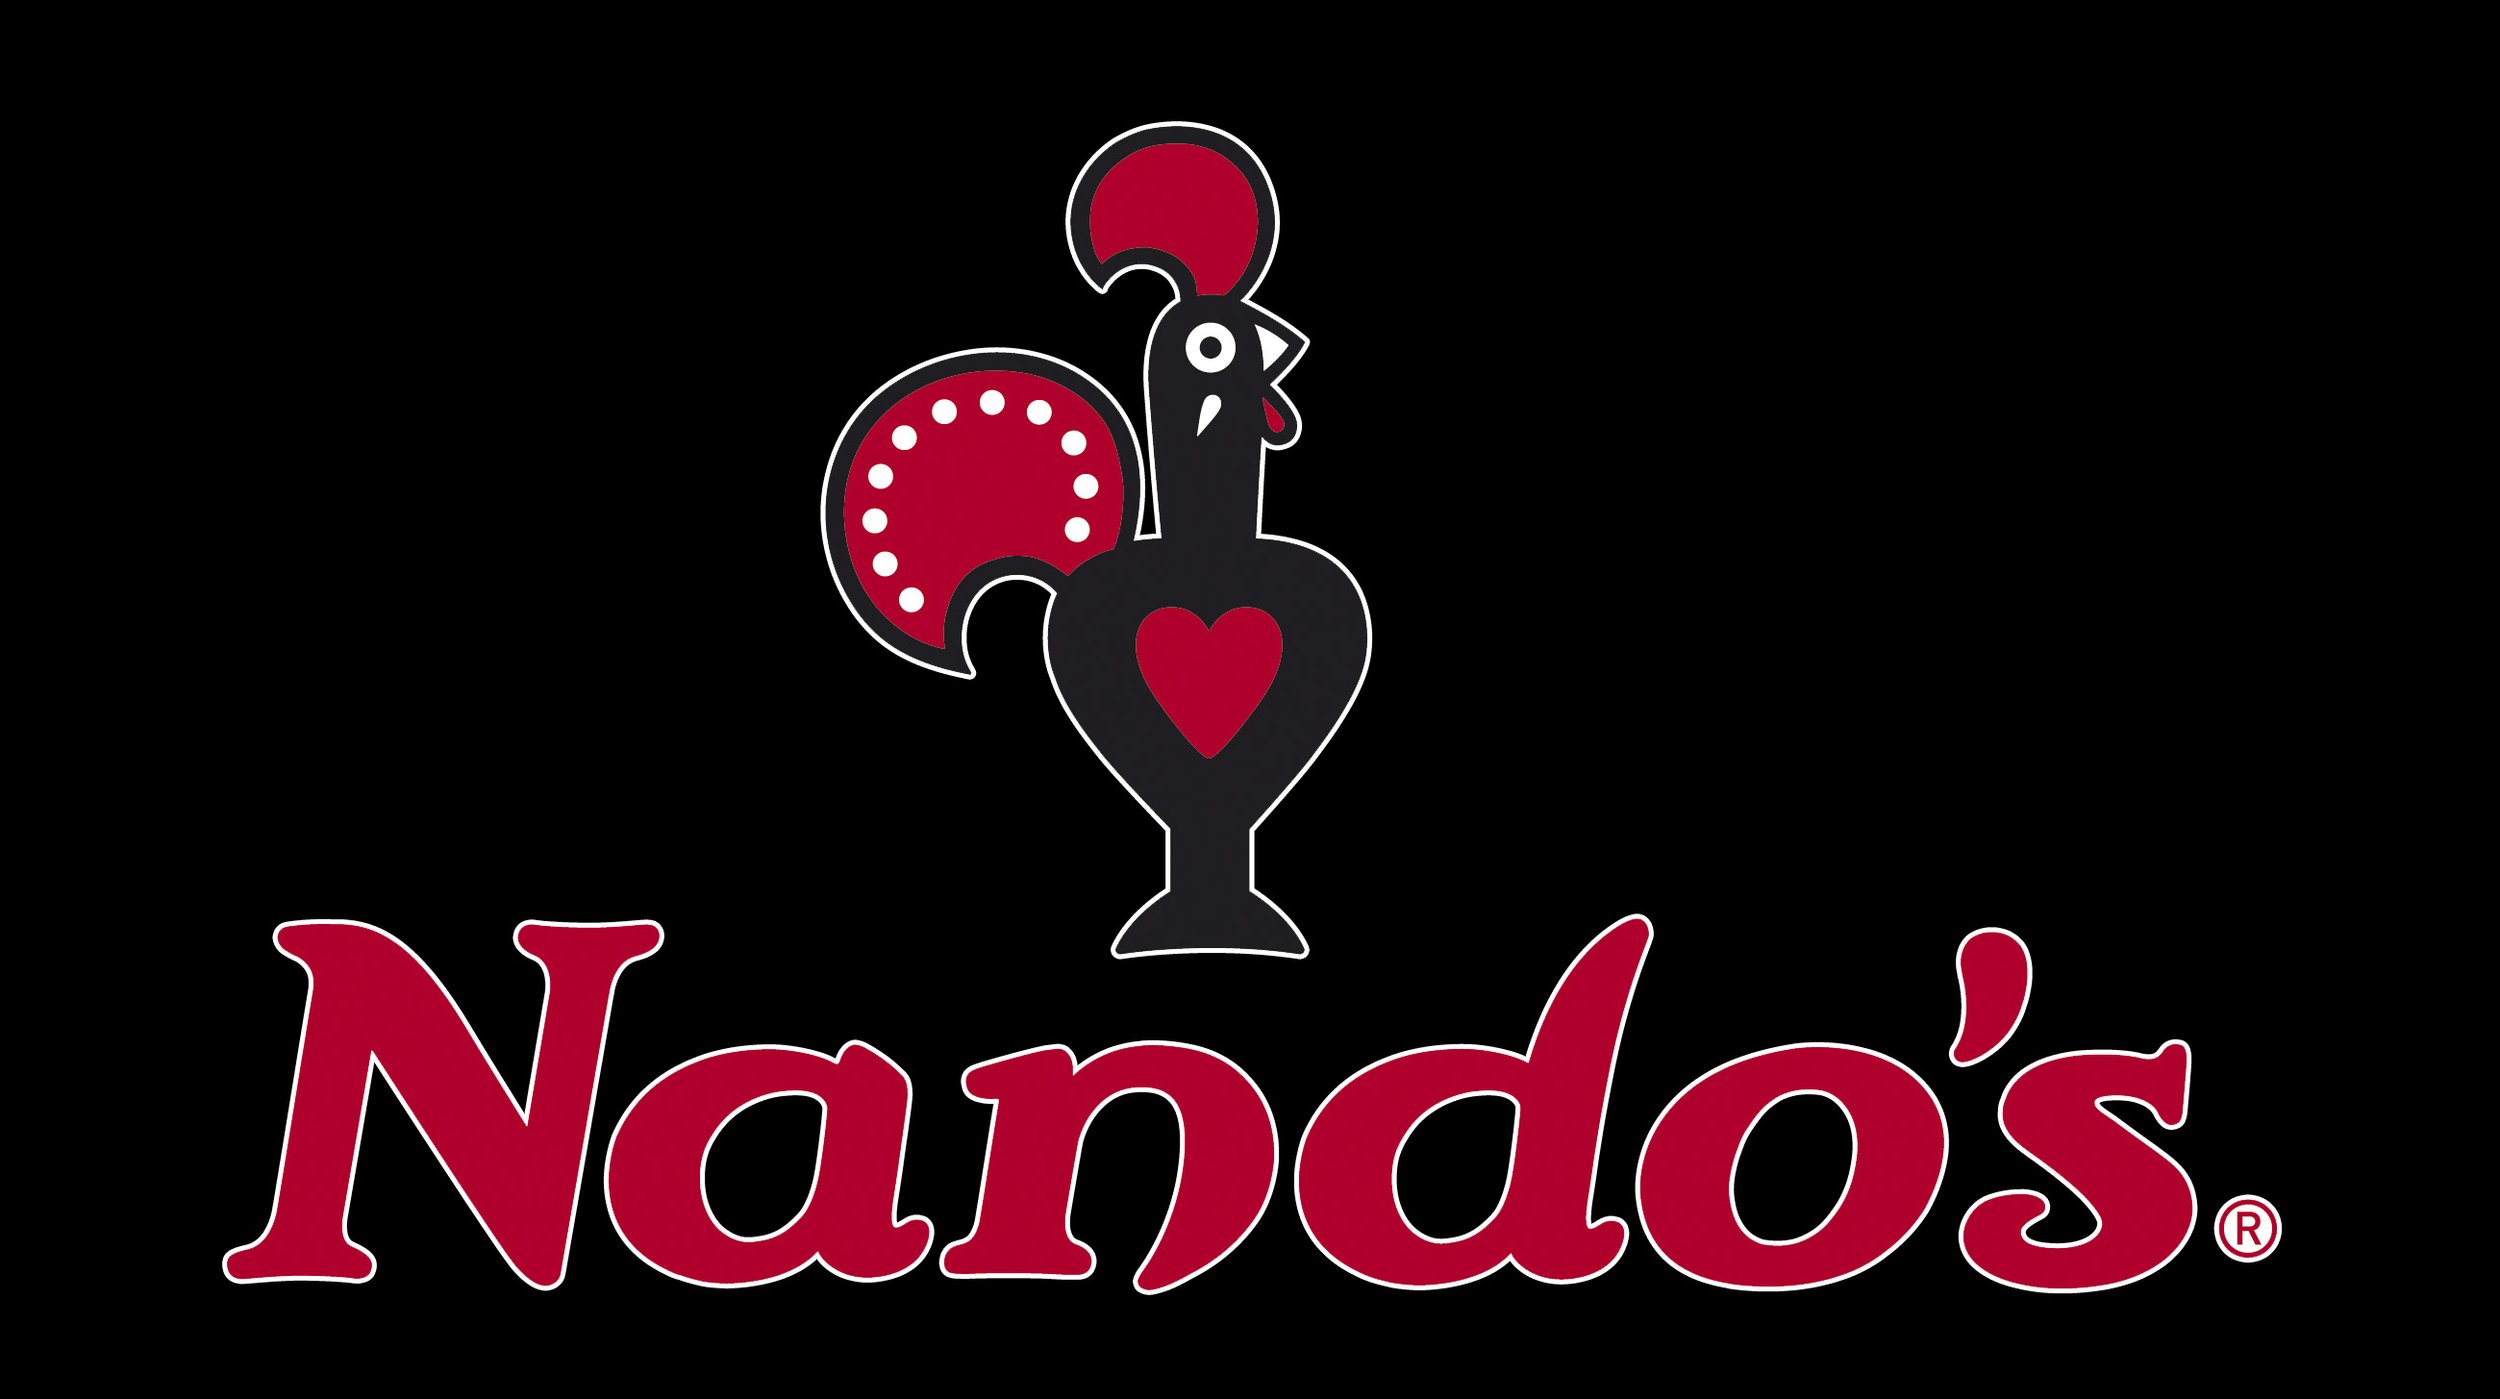 Font-Nandos-Logo.jpg